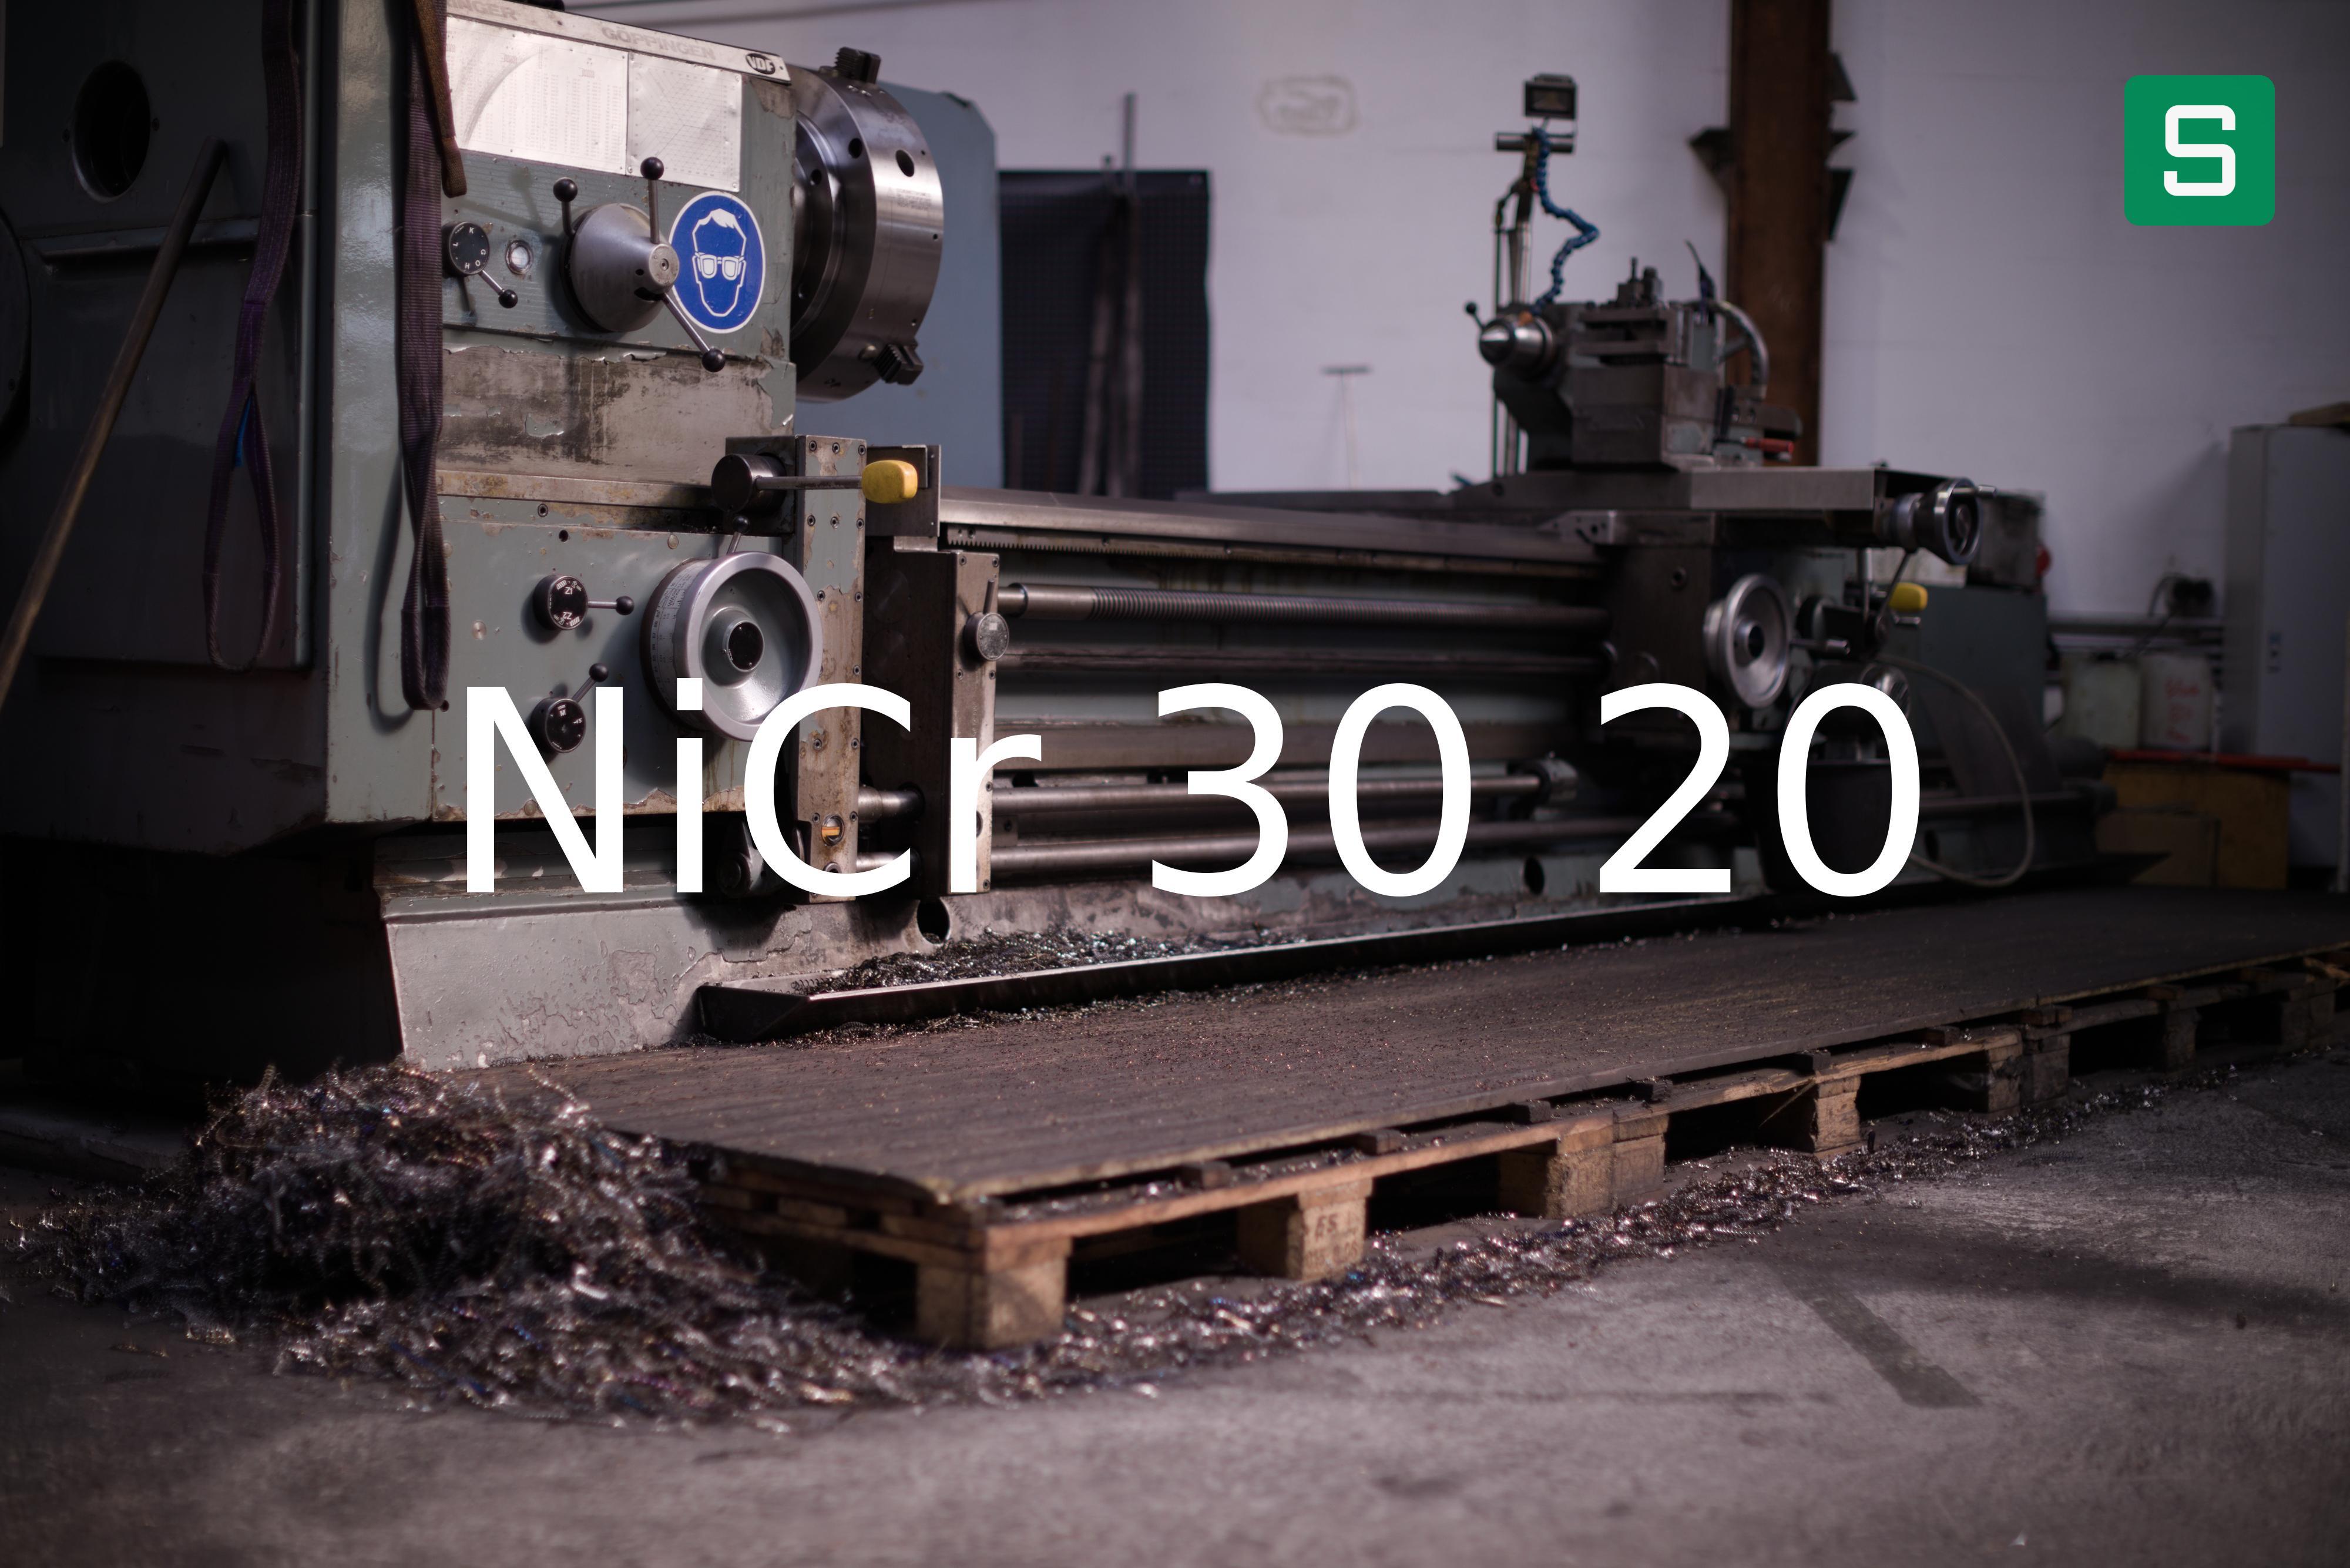 Steel Material: NiCr 30 20